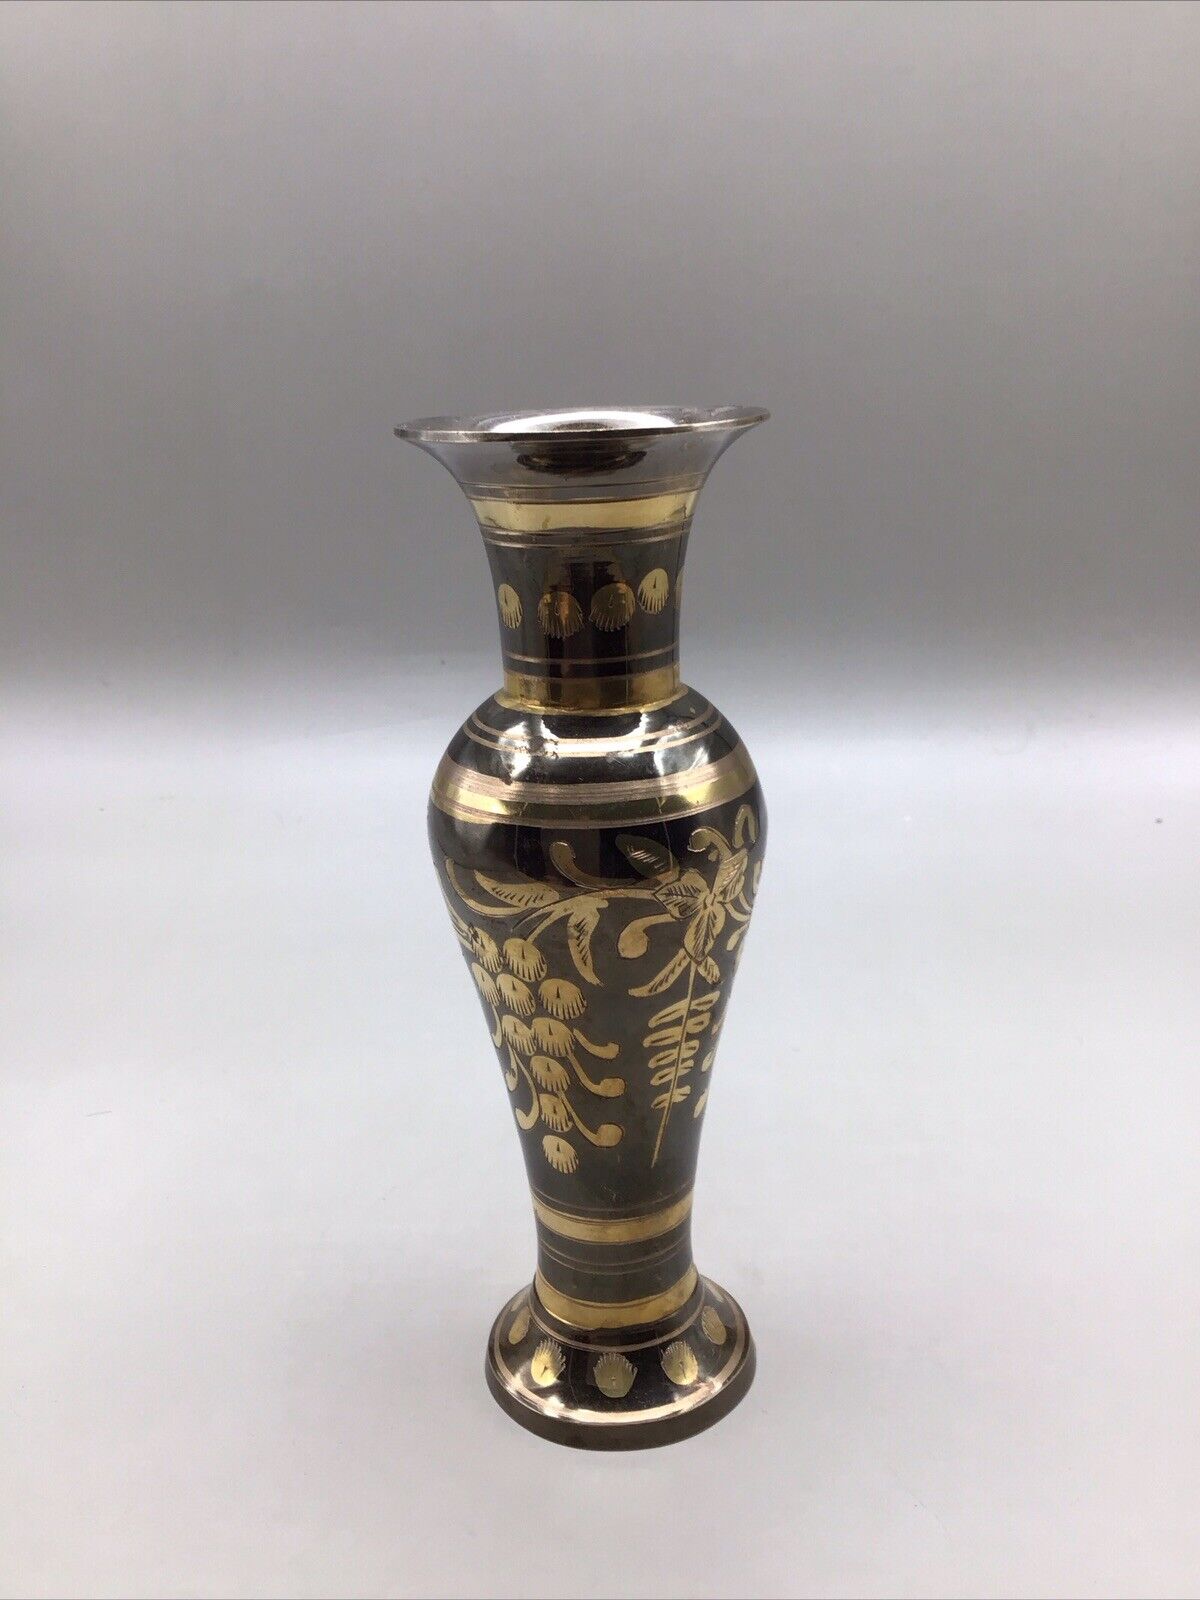 Black & Brass Vintage Etched Floral Design Vase 5.75” tall Made in India